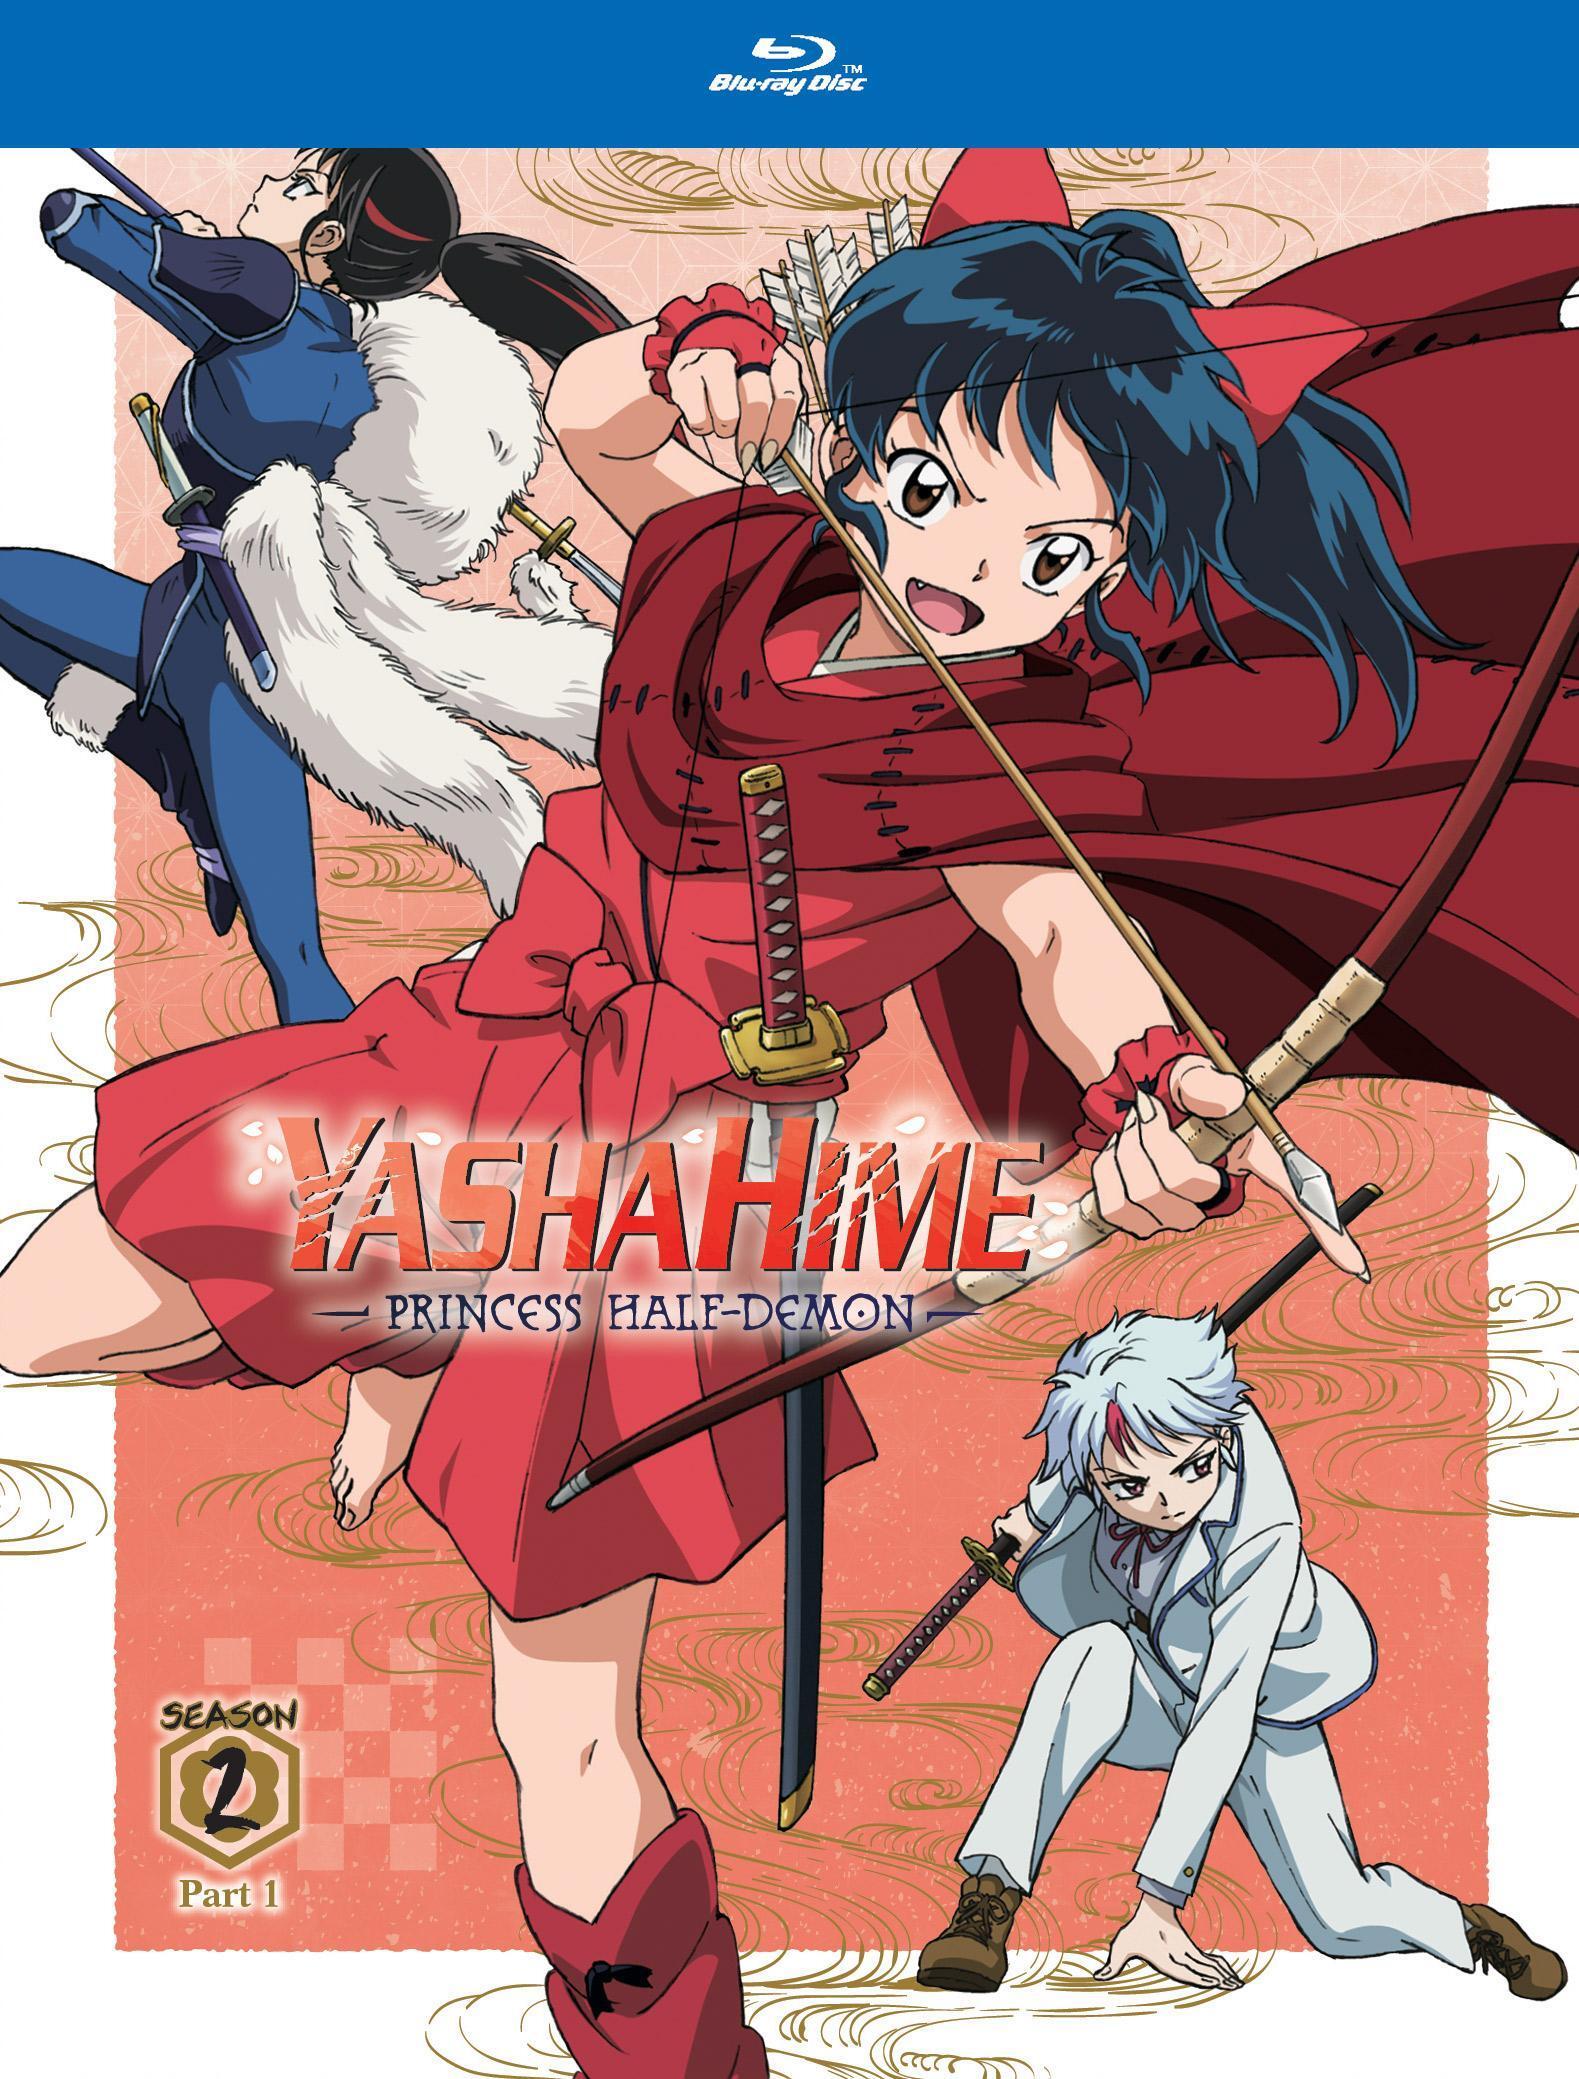 Yashahime: Princess Half-demon - Season 2, Part 1 (Limited Edition) - Blu-ray [ 2021 ]